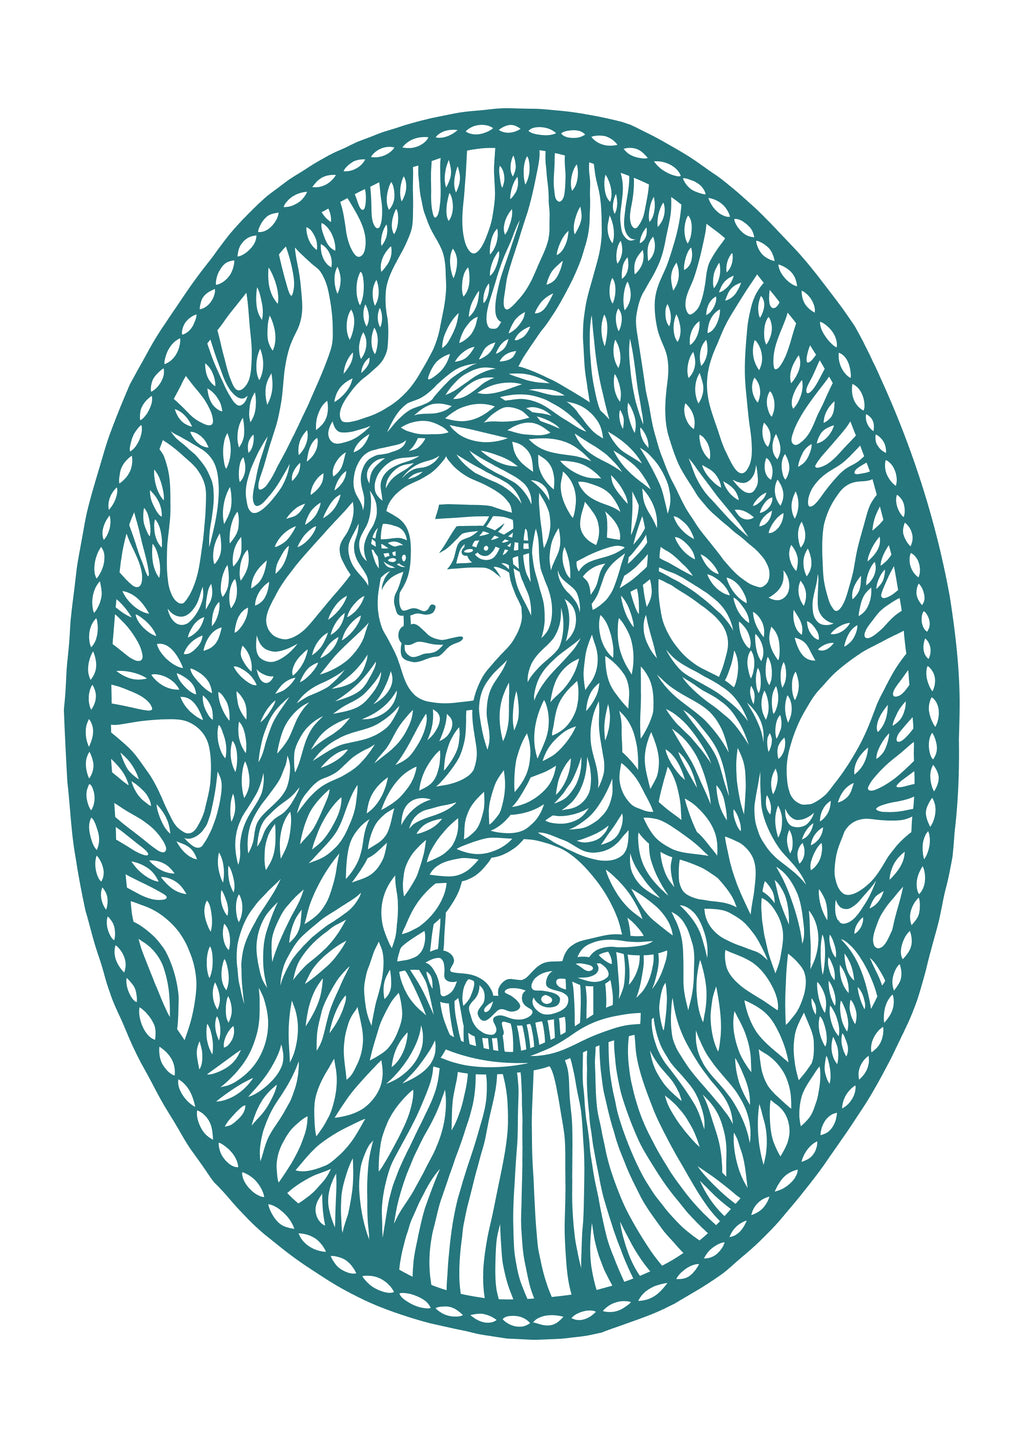 Wood elf girl A6 Print by MarinaPapercuts